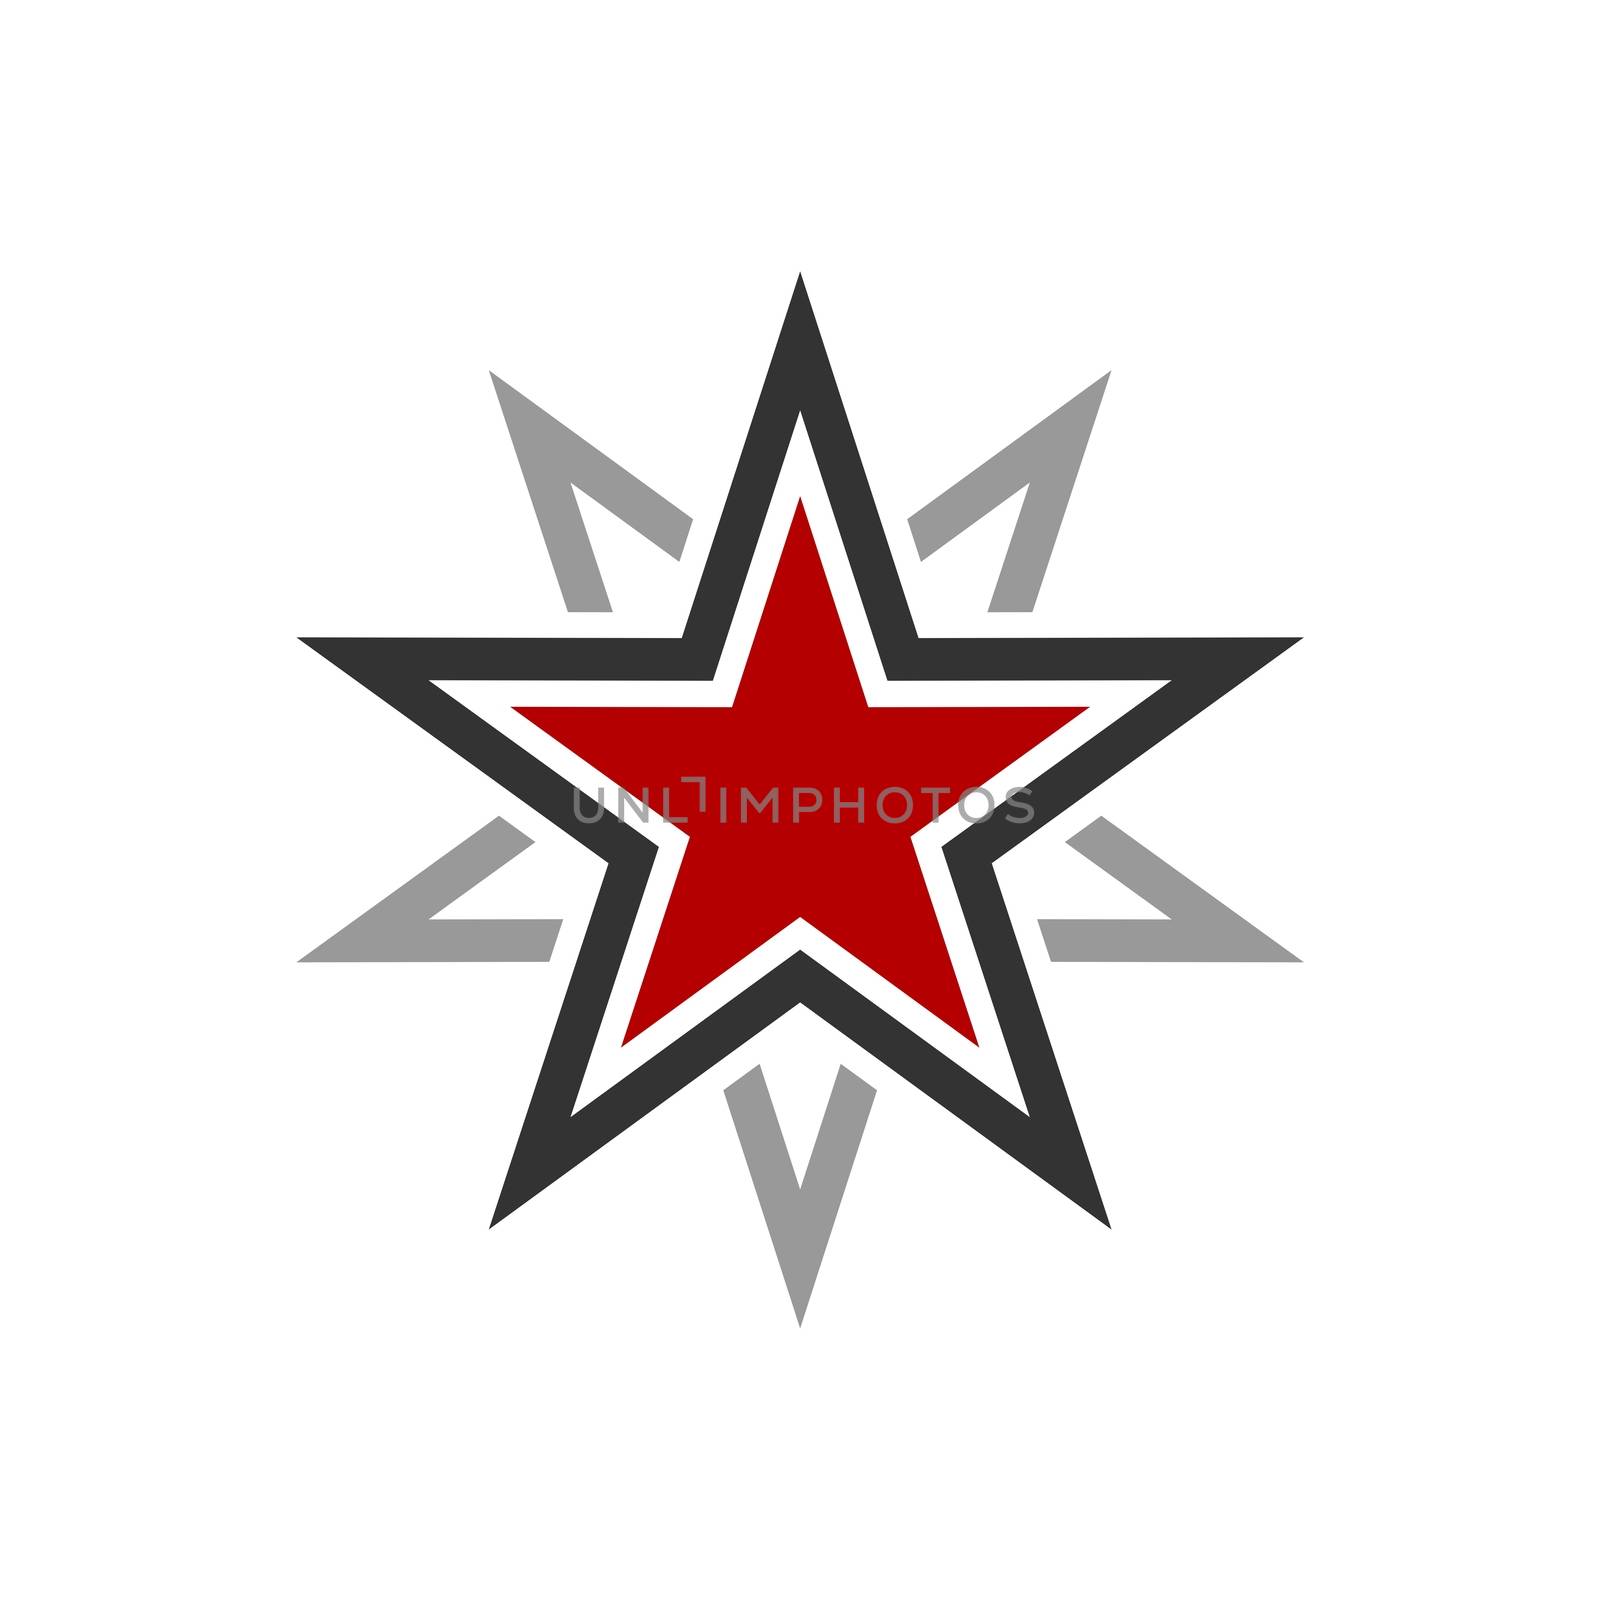 Red Star Ornamental Logo Template Illustration Design EPS 10 by soponyono1